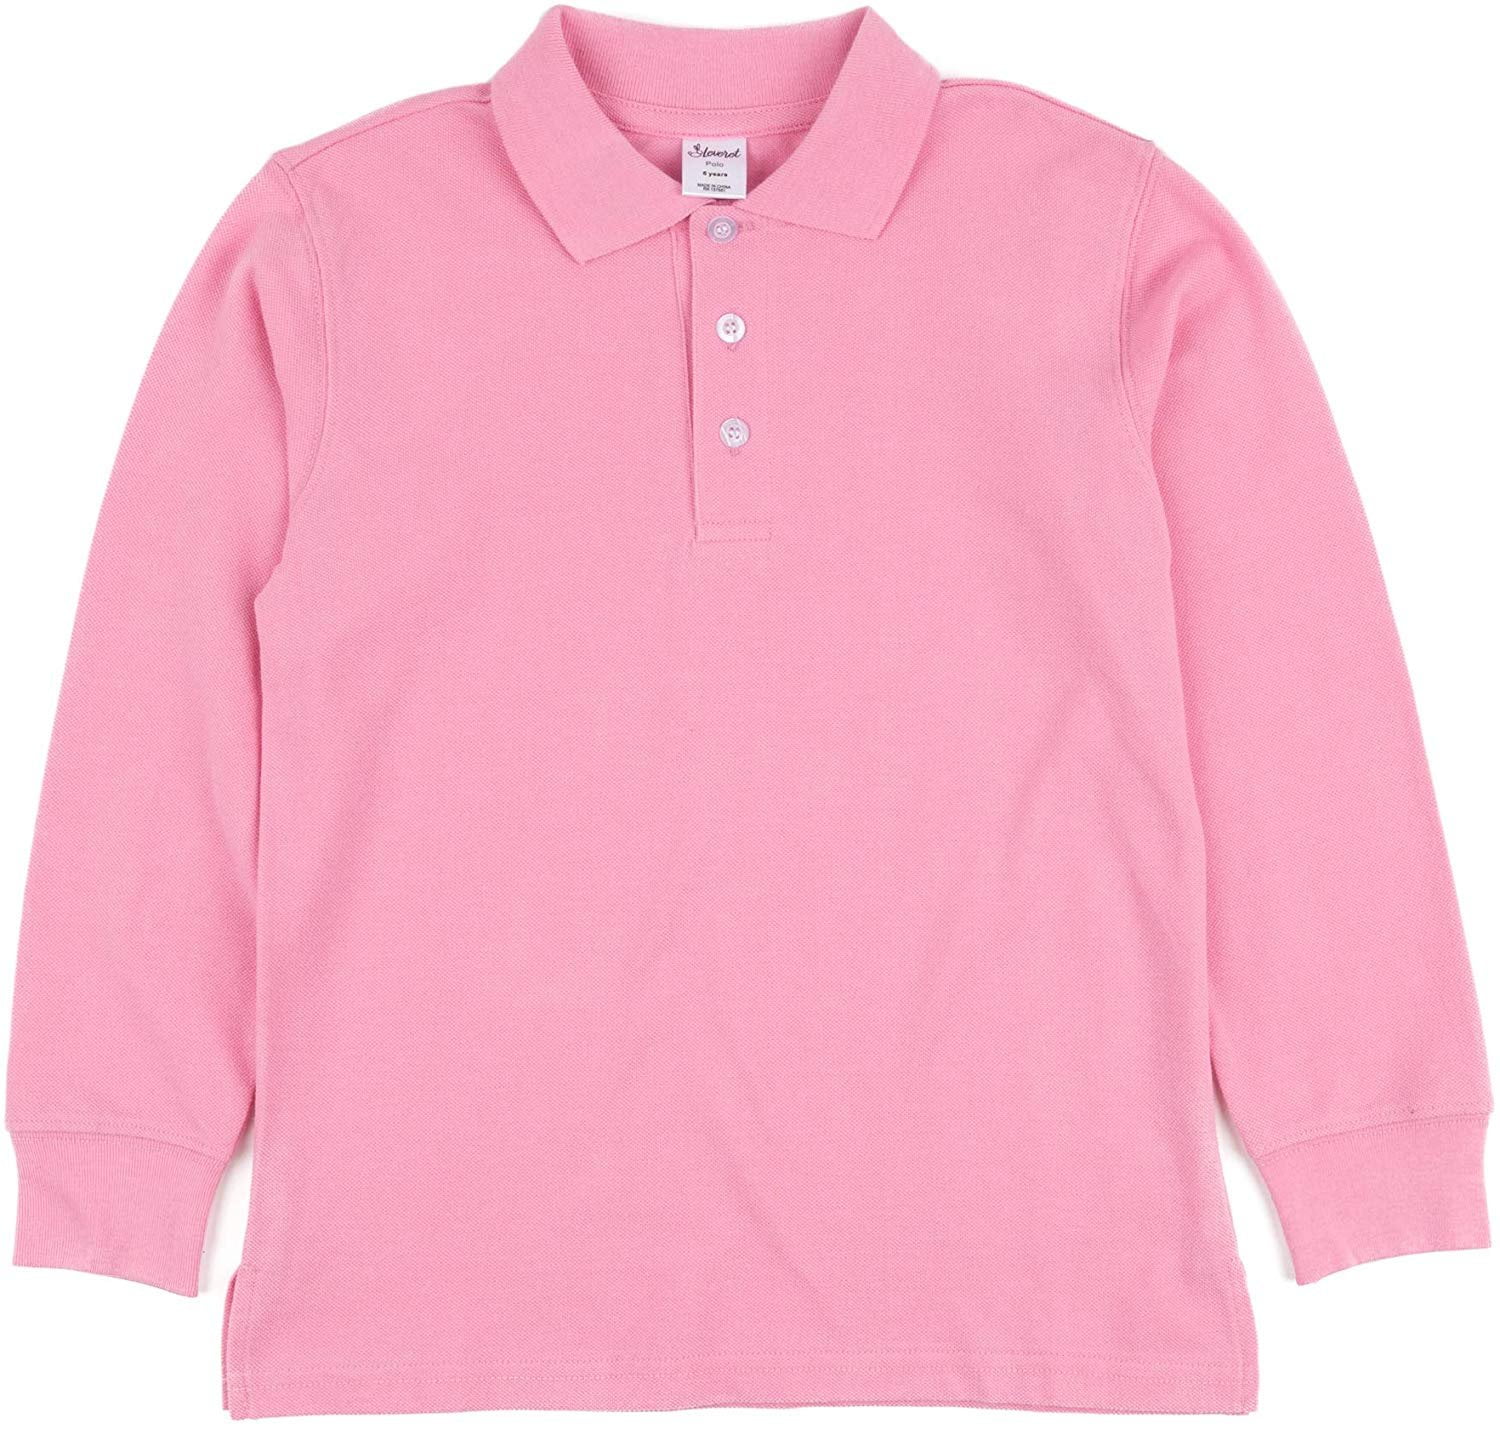 Pink 2T Osh Kosh Girls Long Sleeve Uniform Polo Shirt